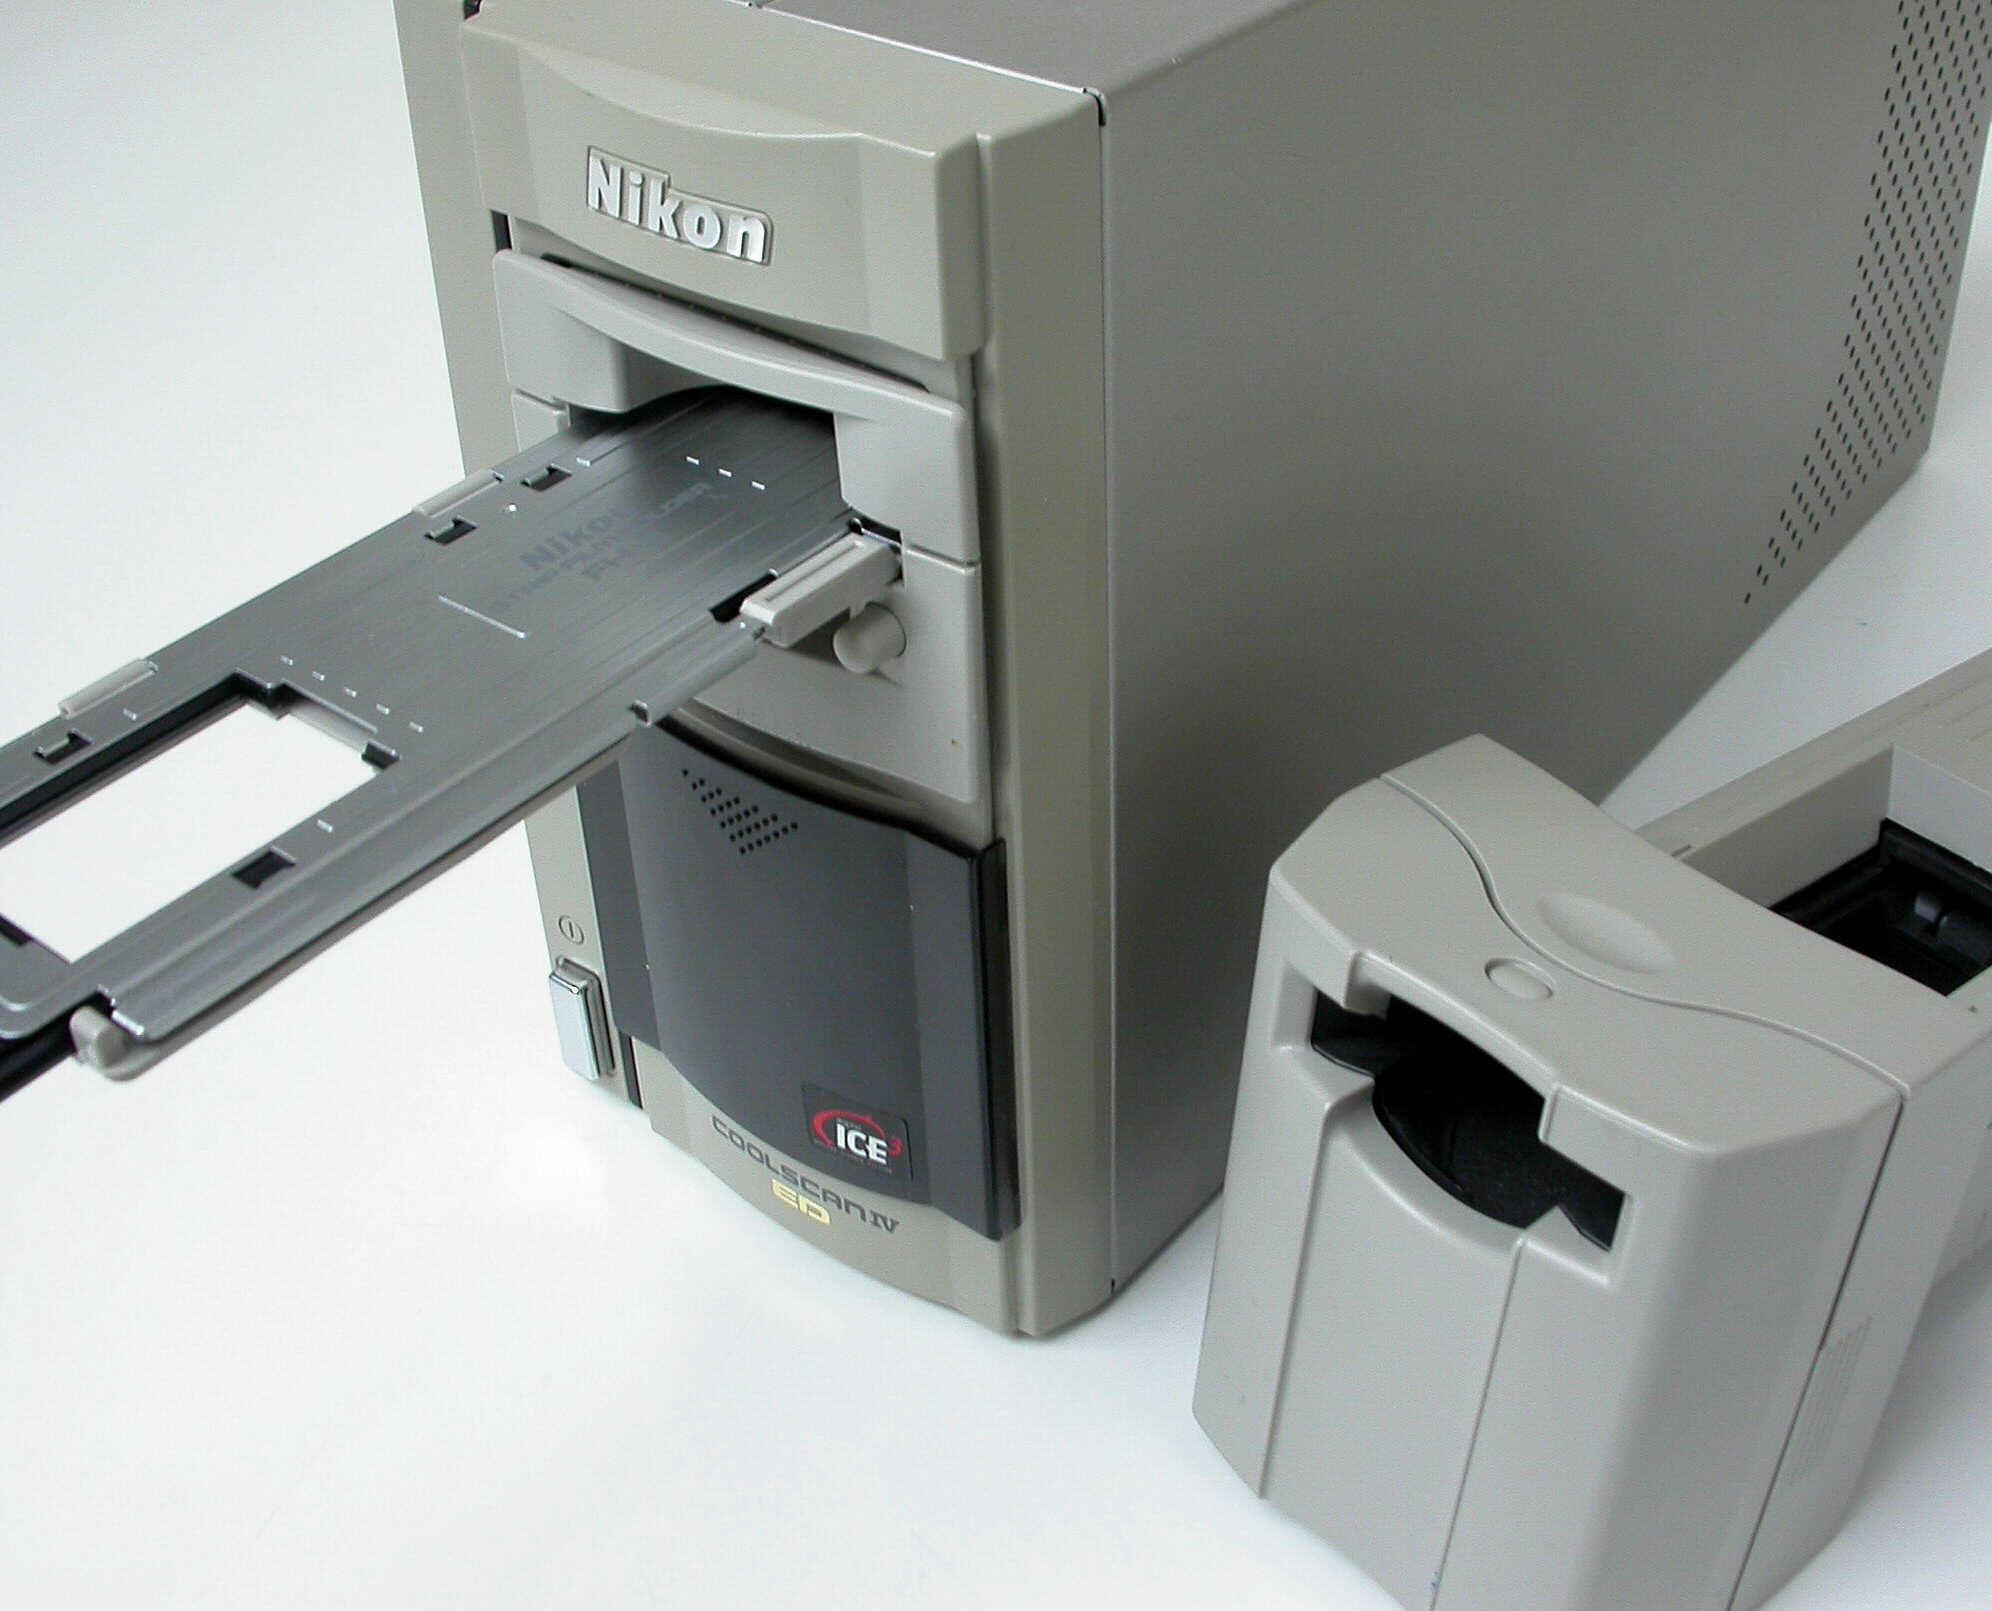 Nikon Coolscan Scanners